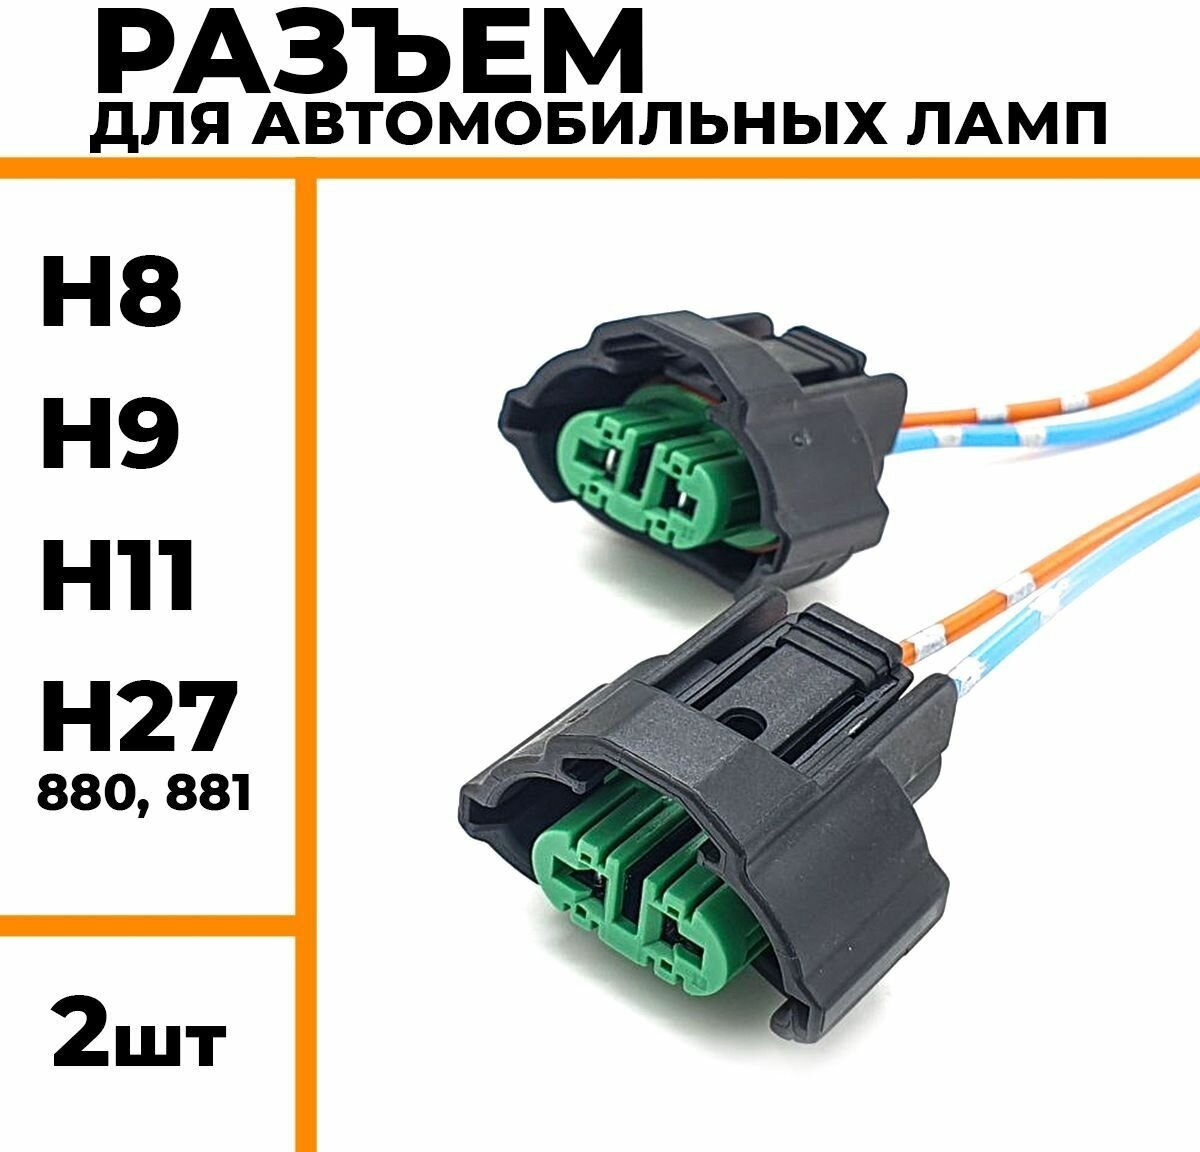 Разъем для автомобильных ламп с цоколем H8 H9 H11 H27 патрон для подключения автомобильных ламп 2 шт